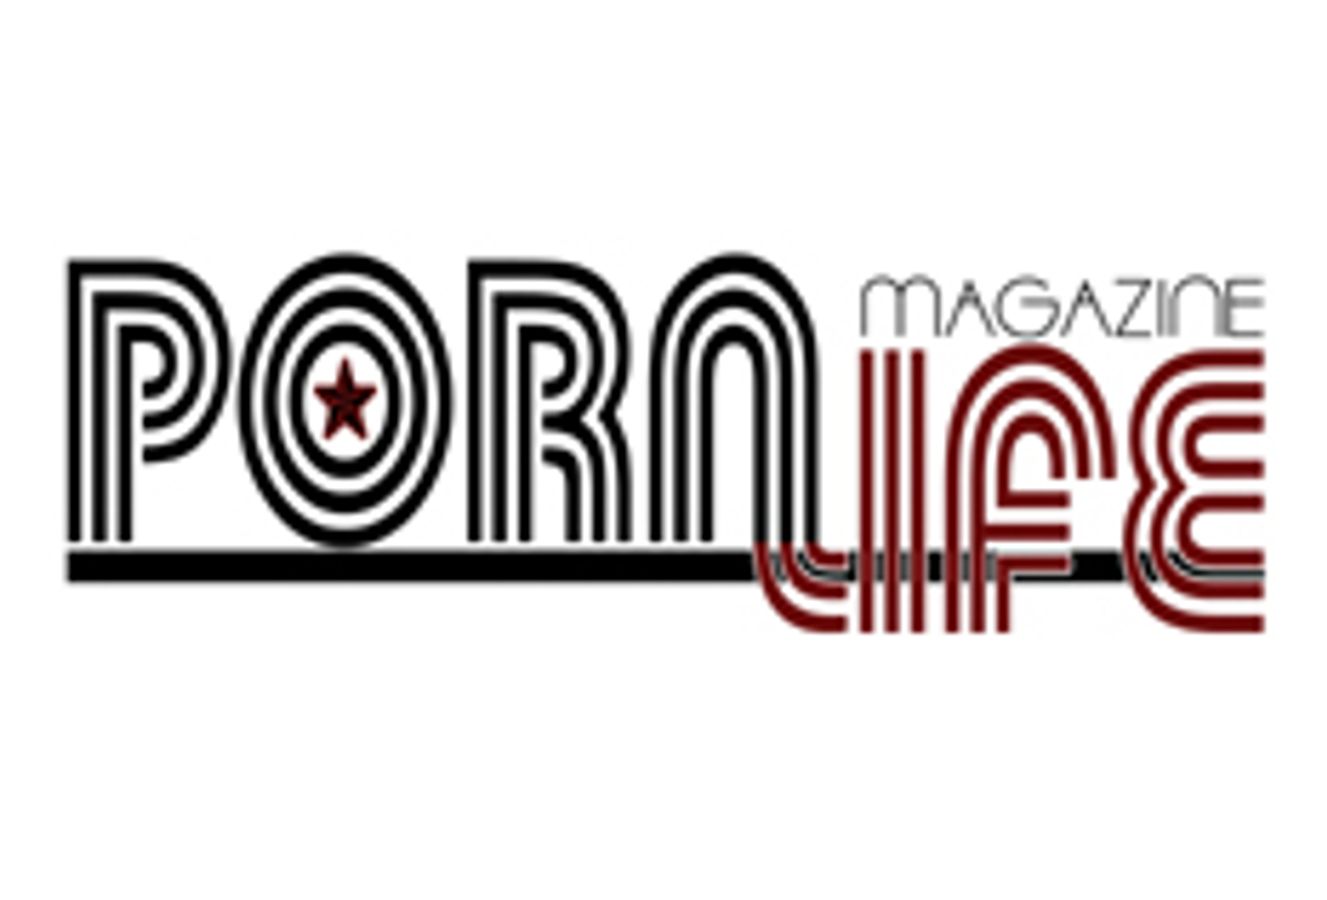 Porn Life Magazine